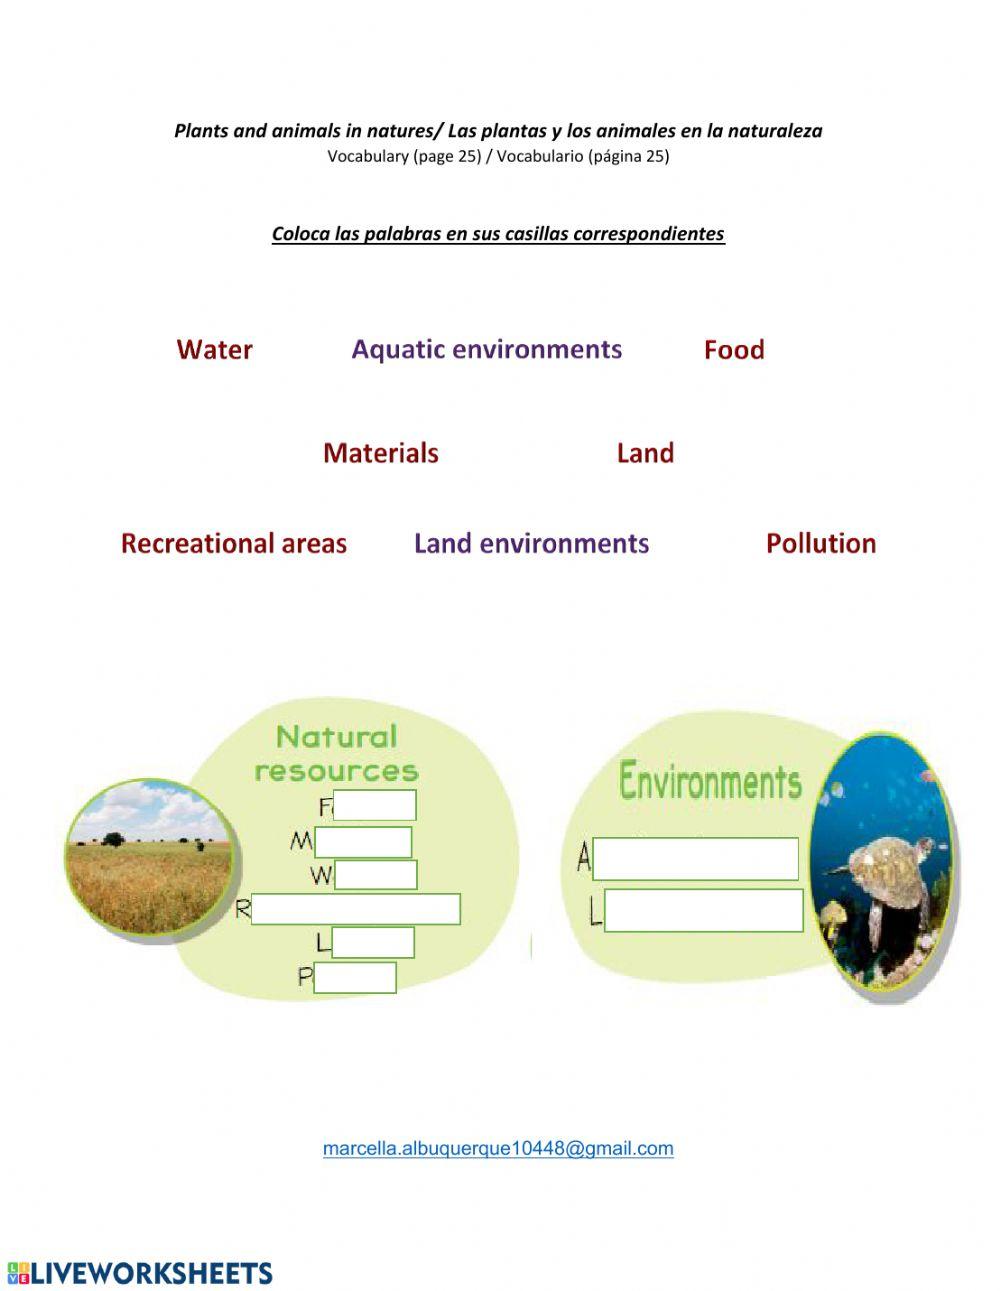 Environments and Natural resources